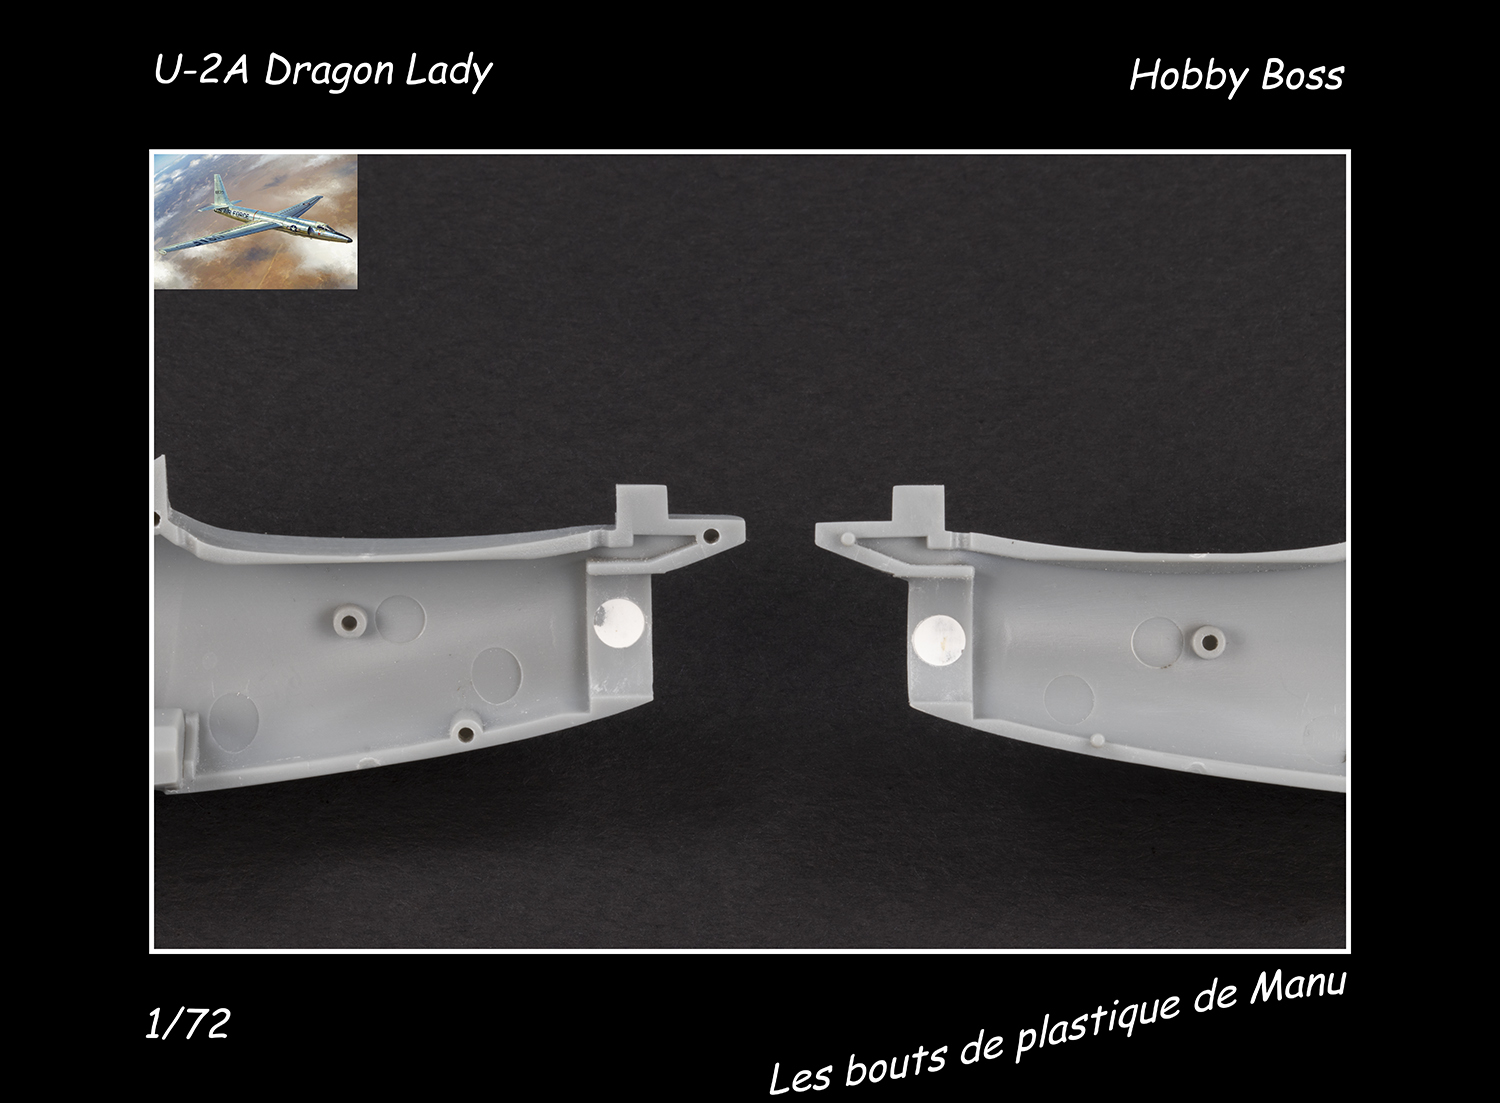 [Hobby Boss] U-2A Dragon Lady - Greffe sans rejet 6qas